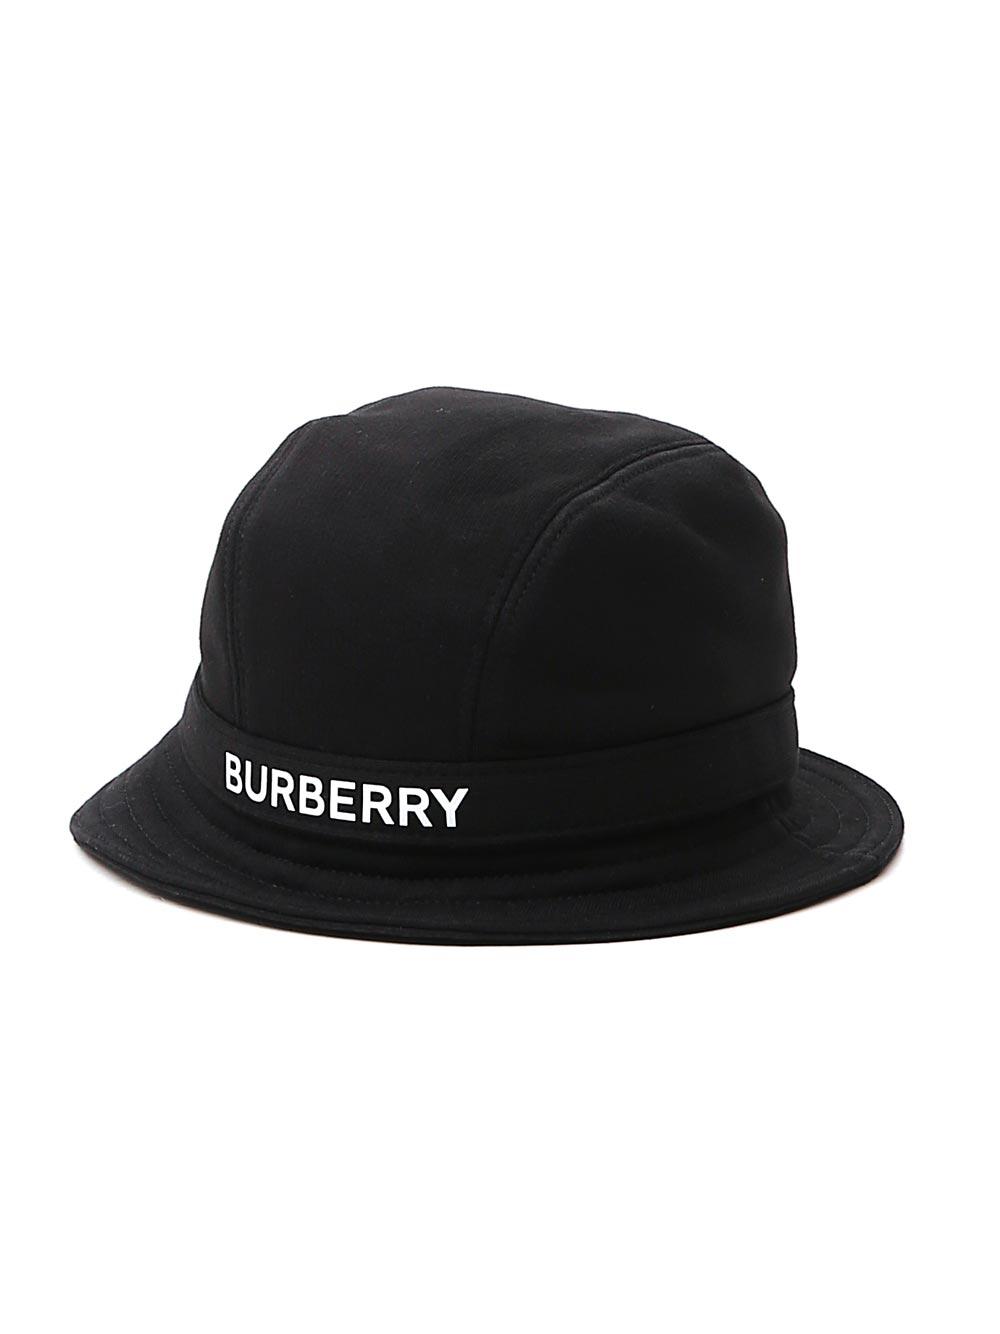 Burberry Cotton Logo Print Bucket Hat in Black - Lyst